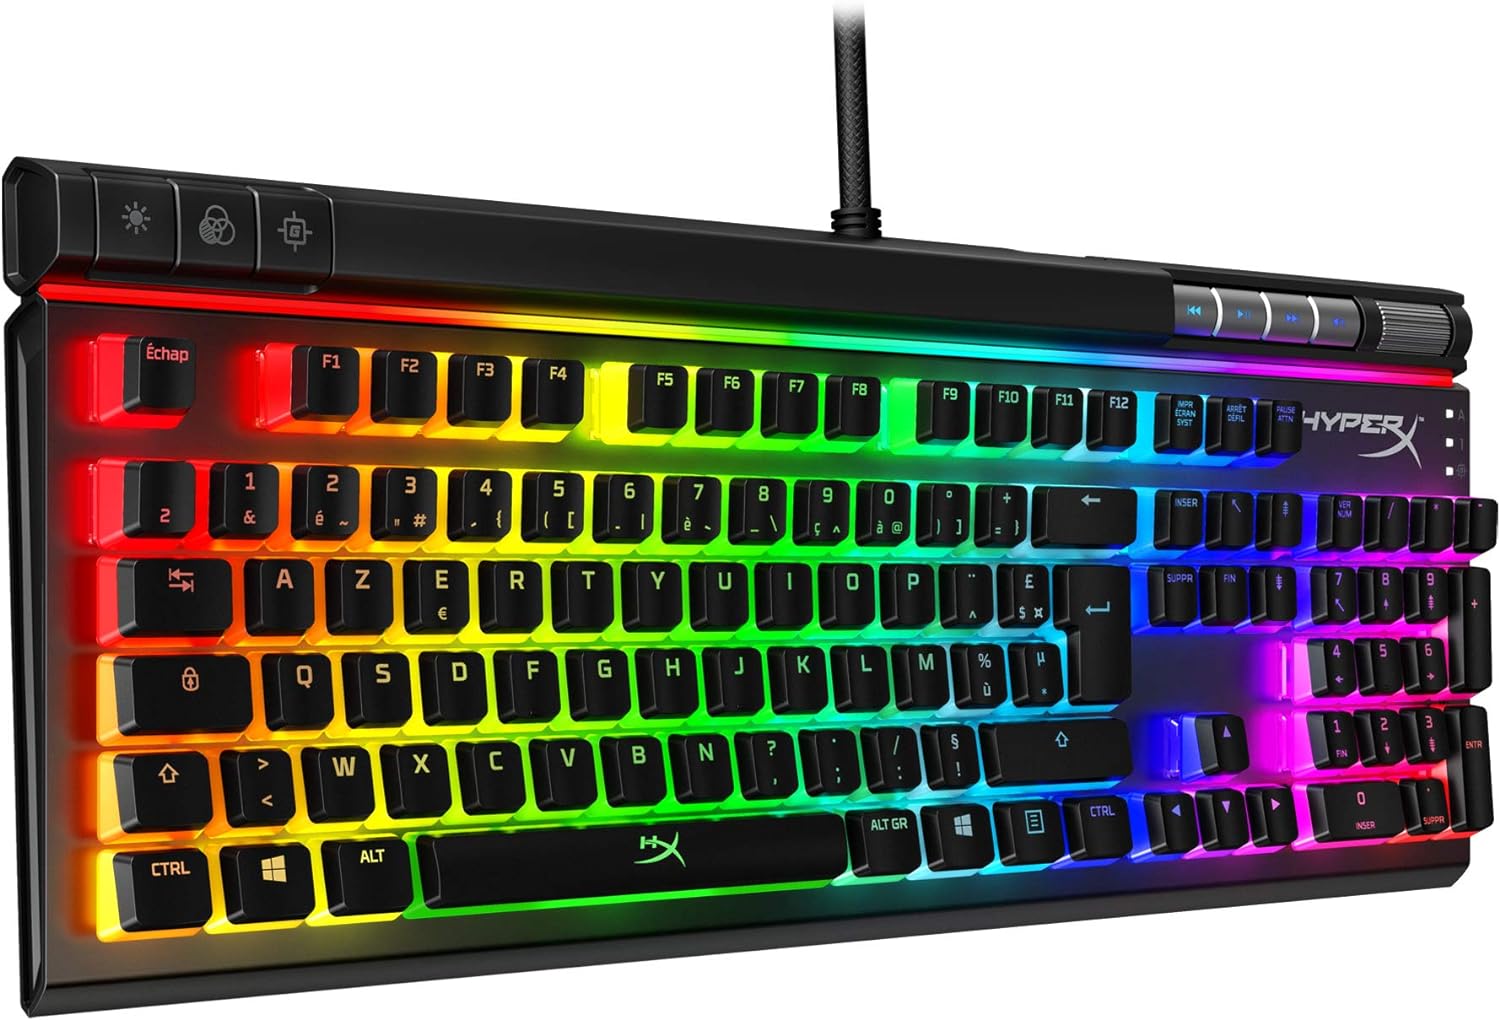 HKBE2X-1X-FRG - Premium HyperX gaming keyboard with customizable RGB lighting. 0740617303773